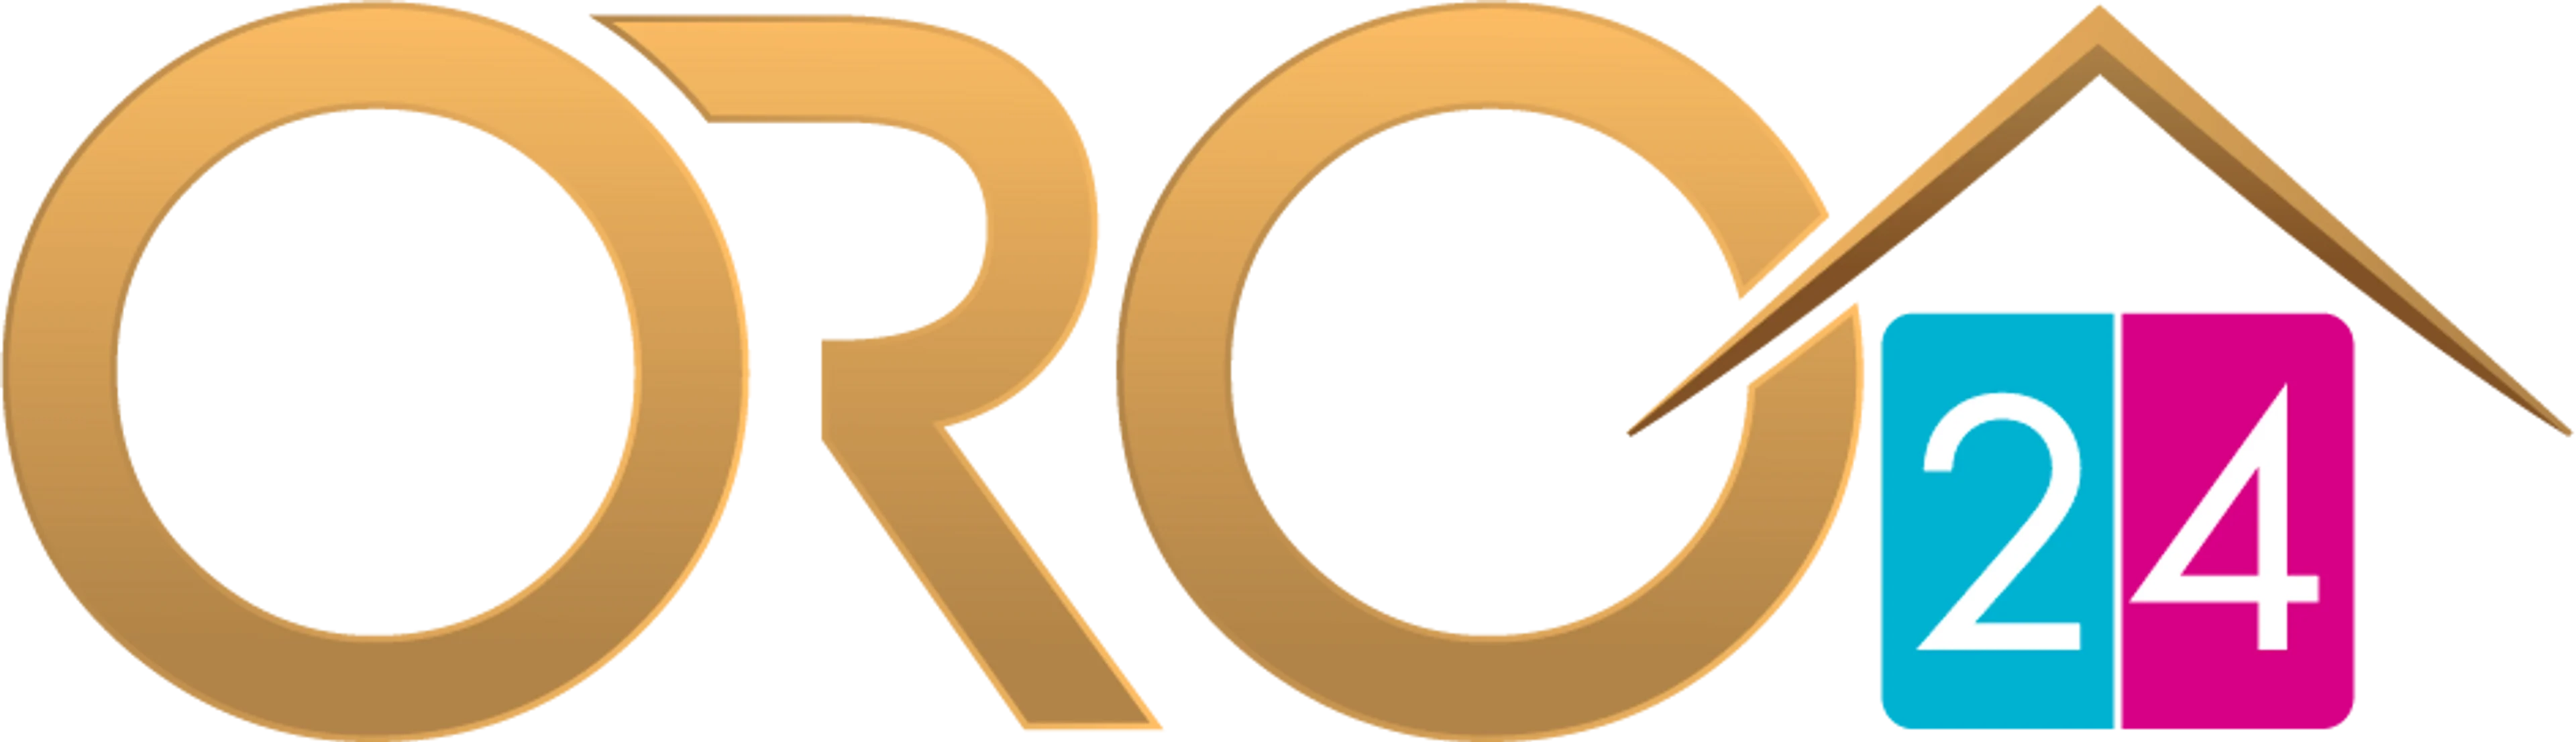 Logo of the real estate developer "ORO24"